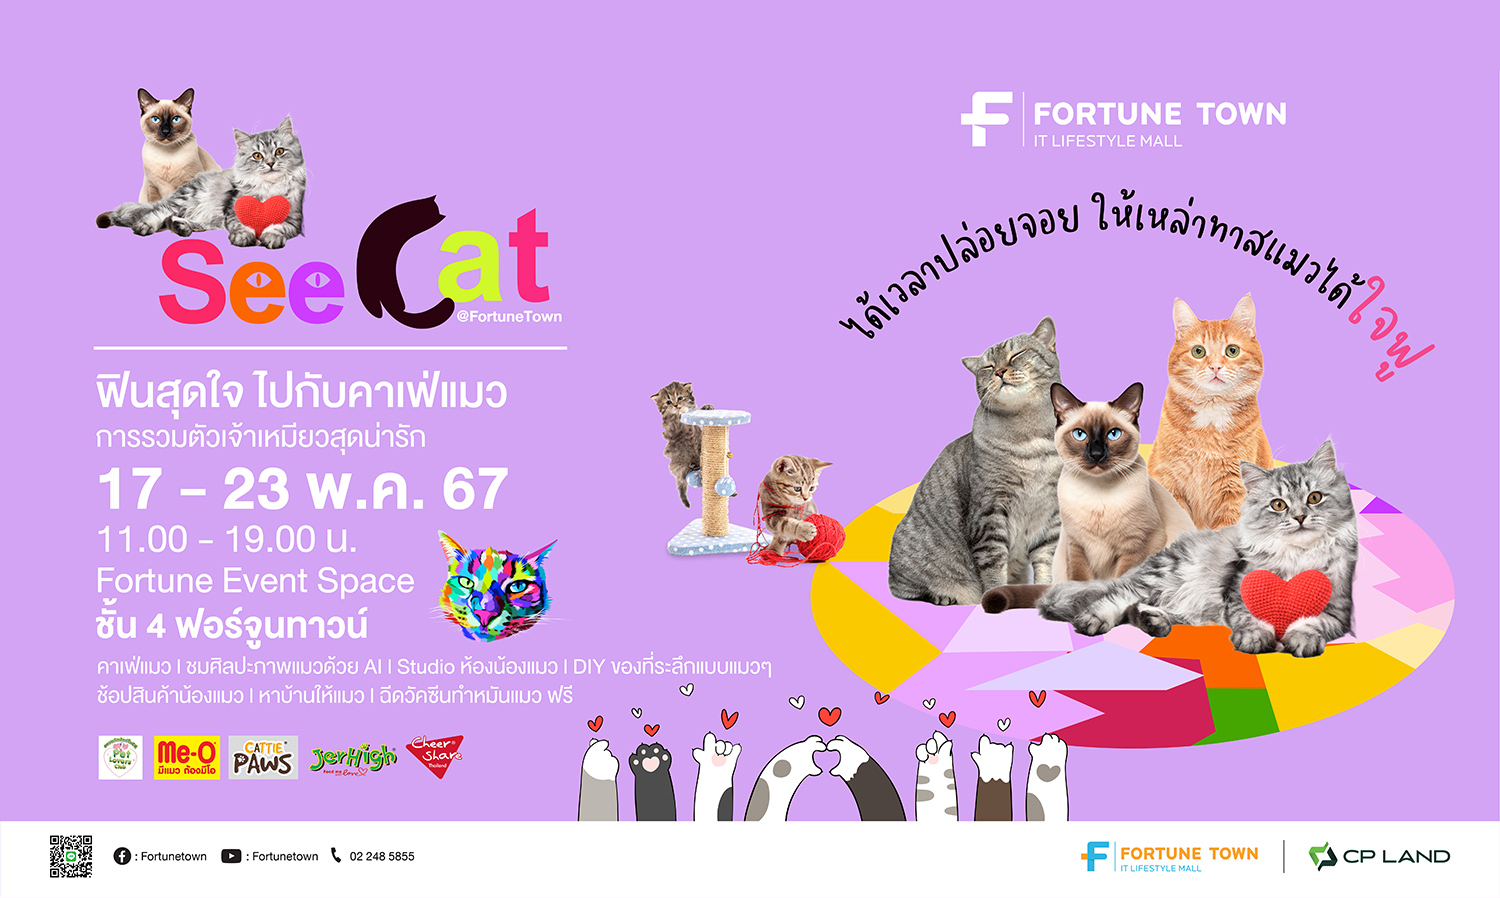 Fortune Town เปิดพื้นที่จัดกิจกรรมแห่งใหม่ Fortune Event Space  ชวนทาสแมวได้ใจฟู กับงาน See Cat  Fortune Town